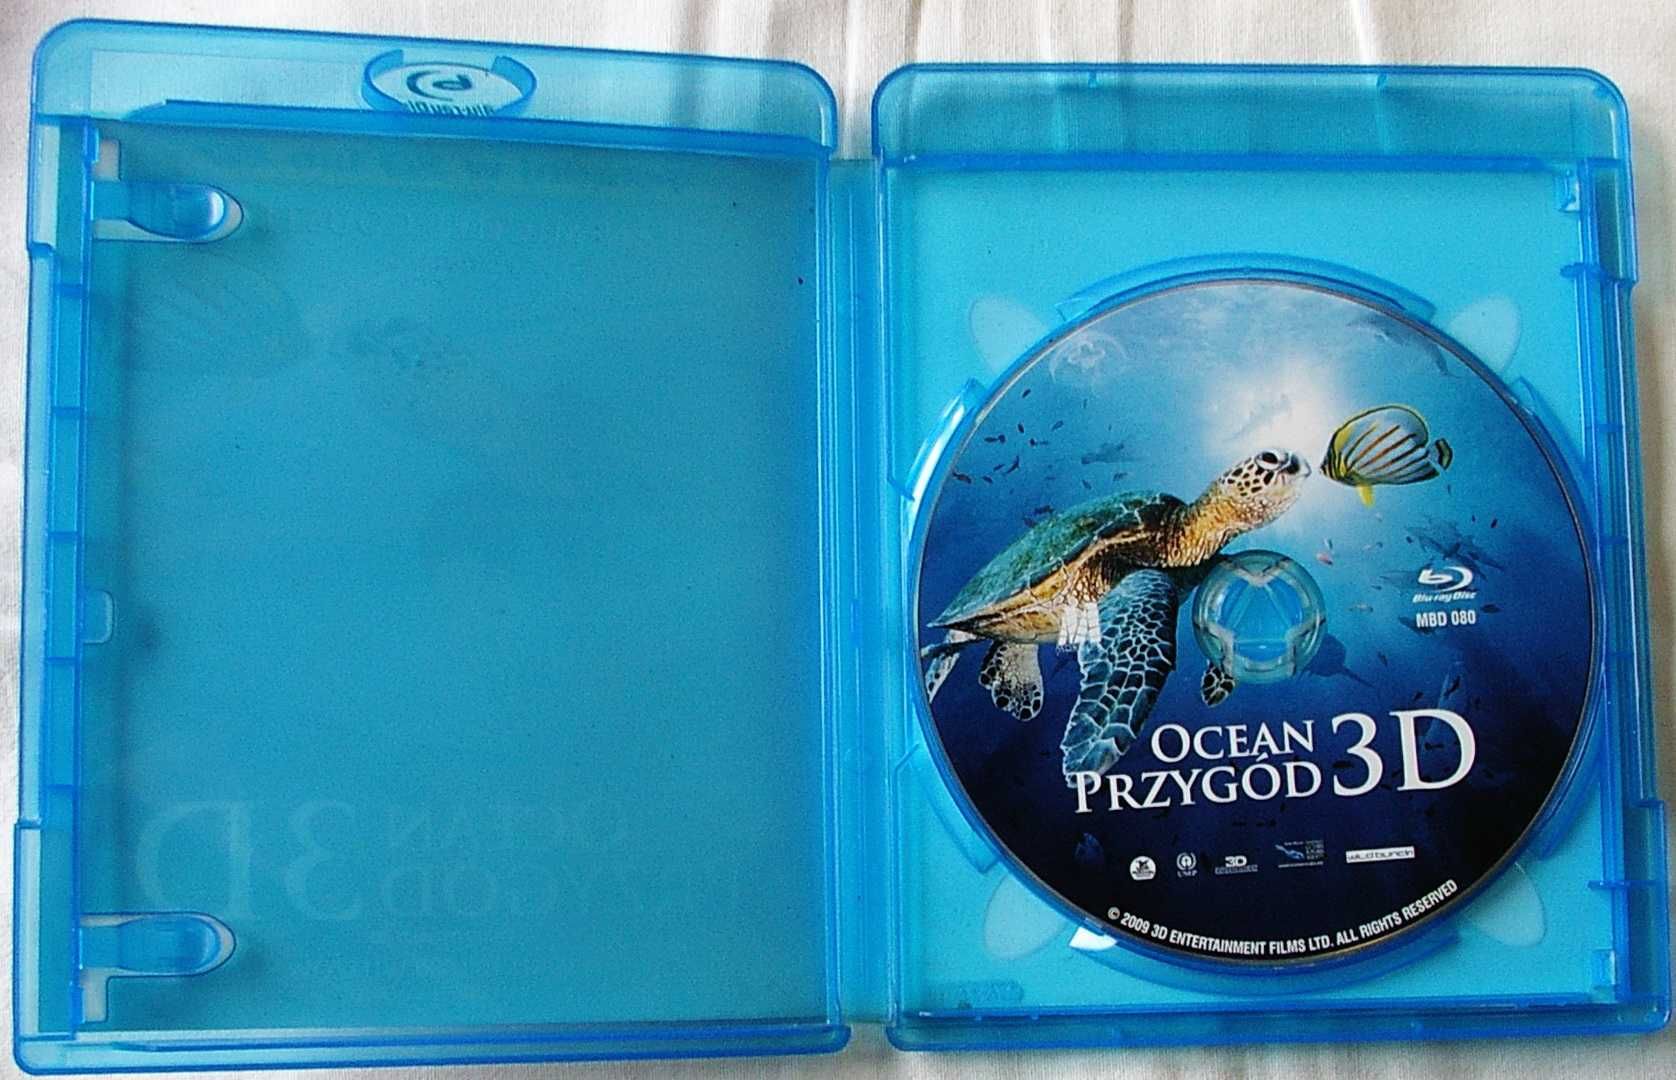 OCEAN PRZYGÓD 3D i 2D Blu-ray - Jean Michel Cousteau